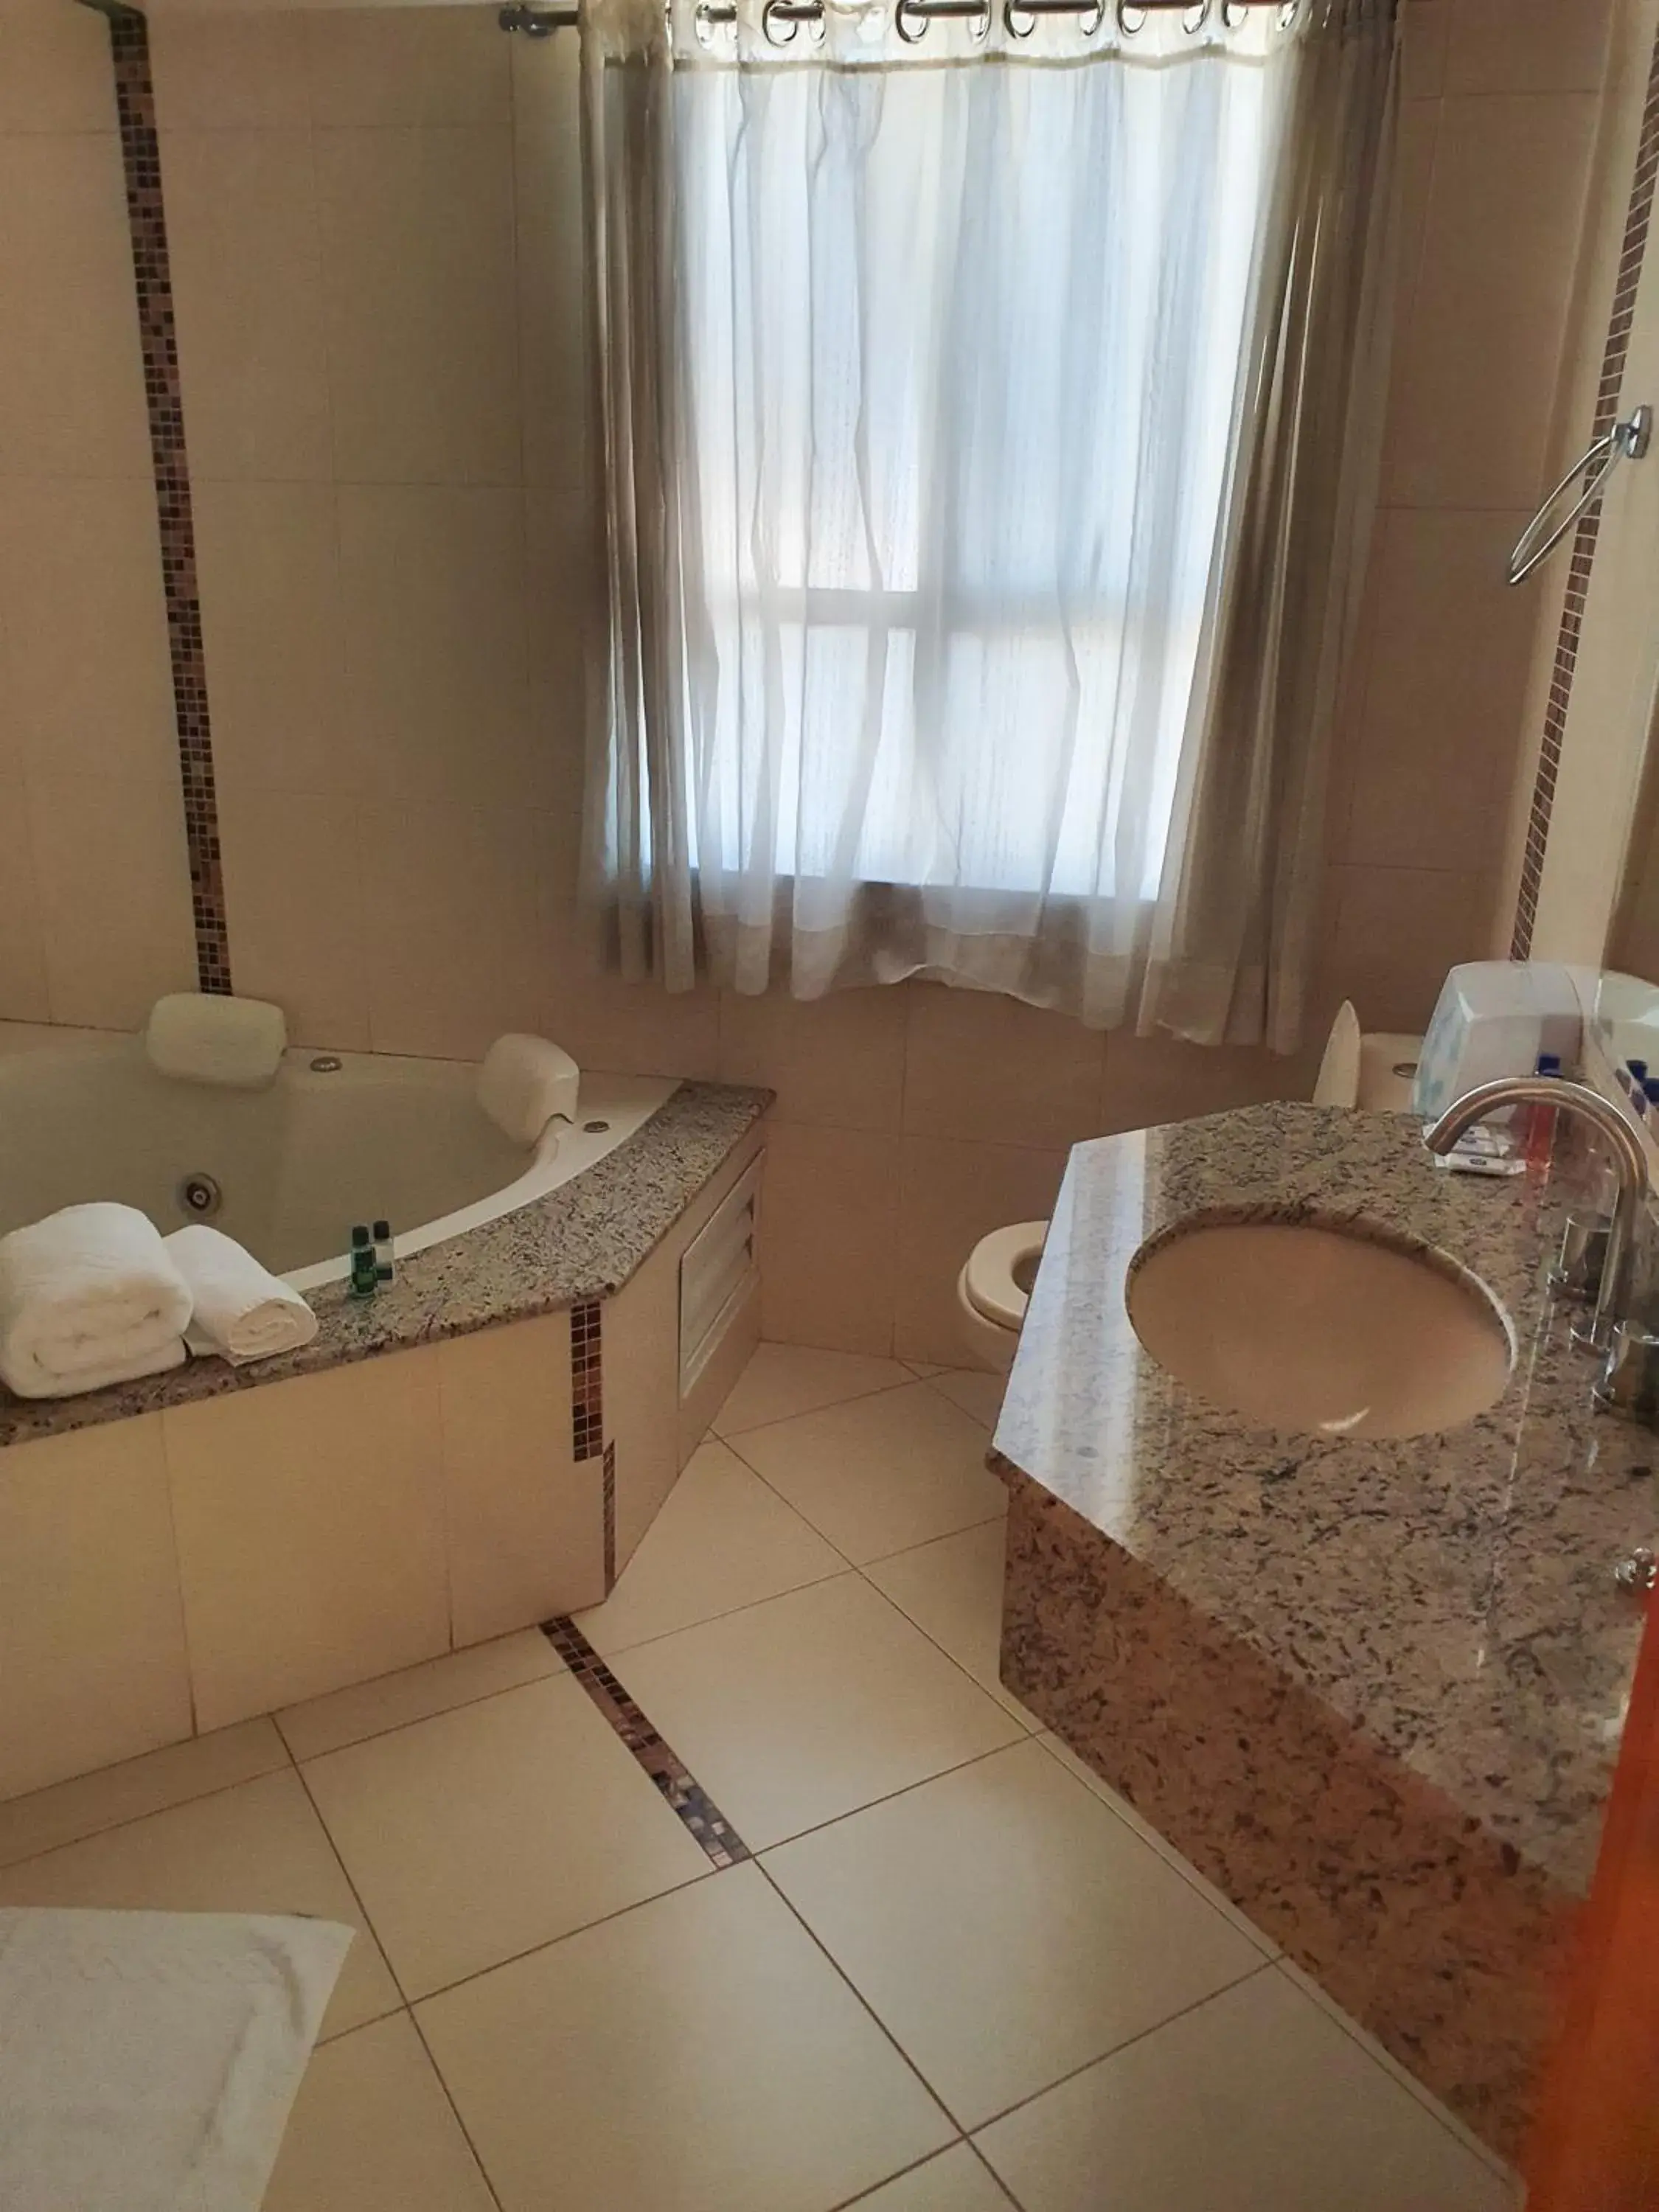 Bathroom in San Marino Palace Hotel